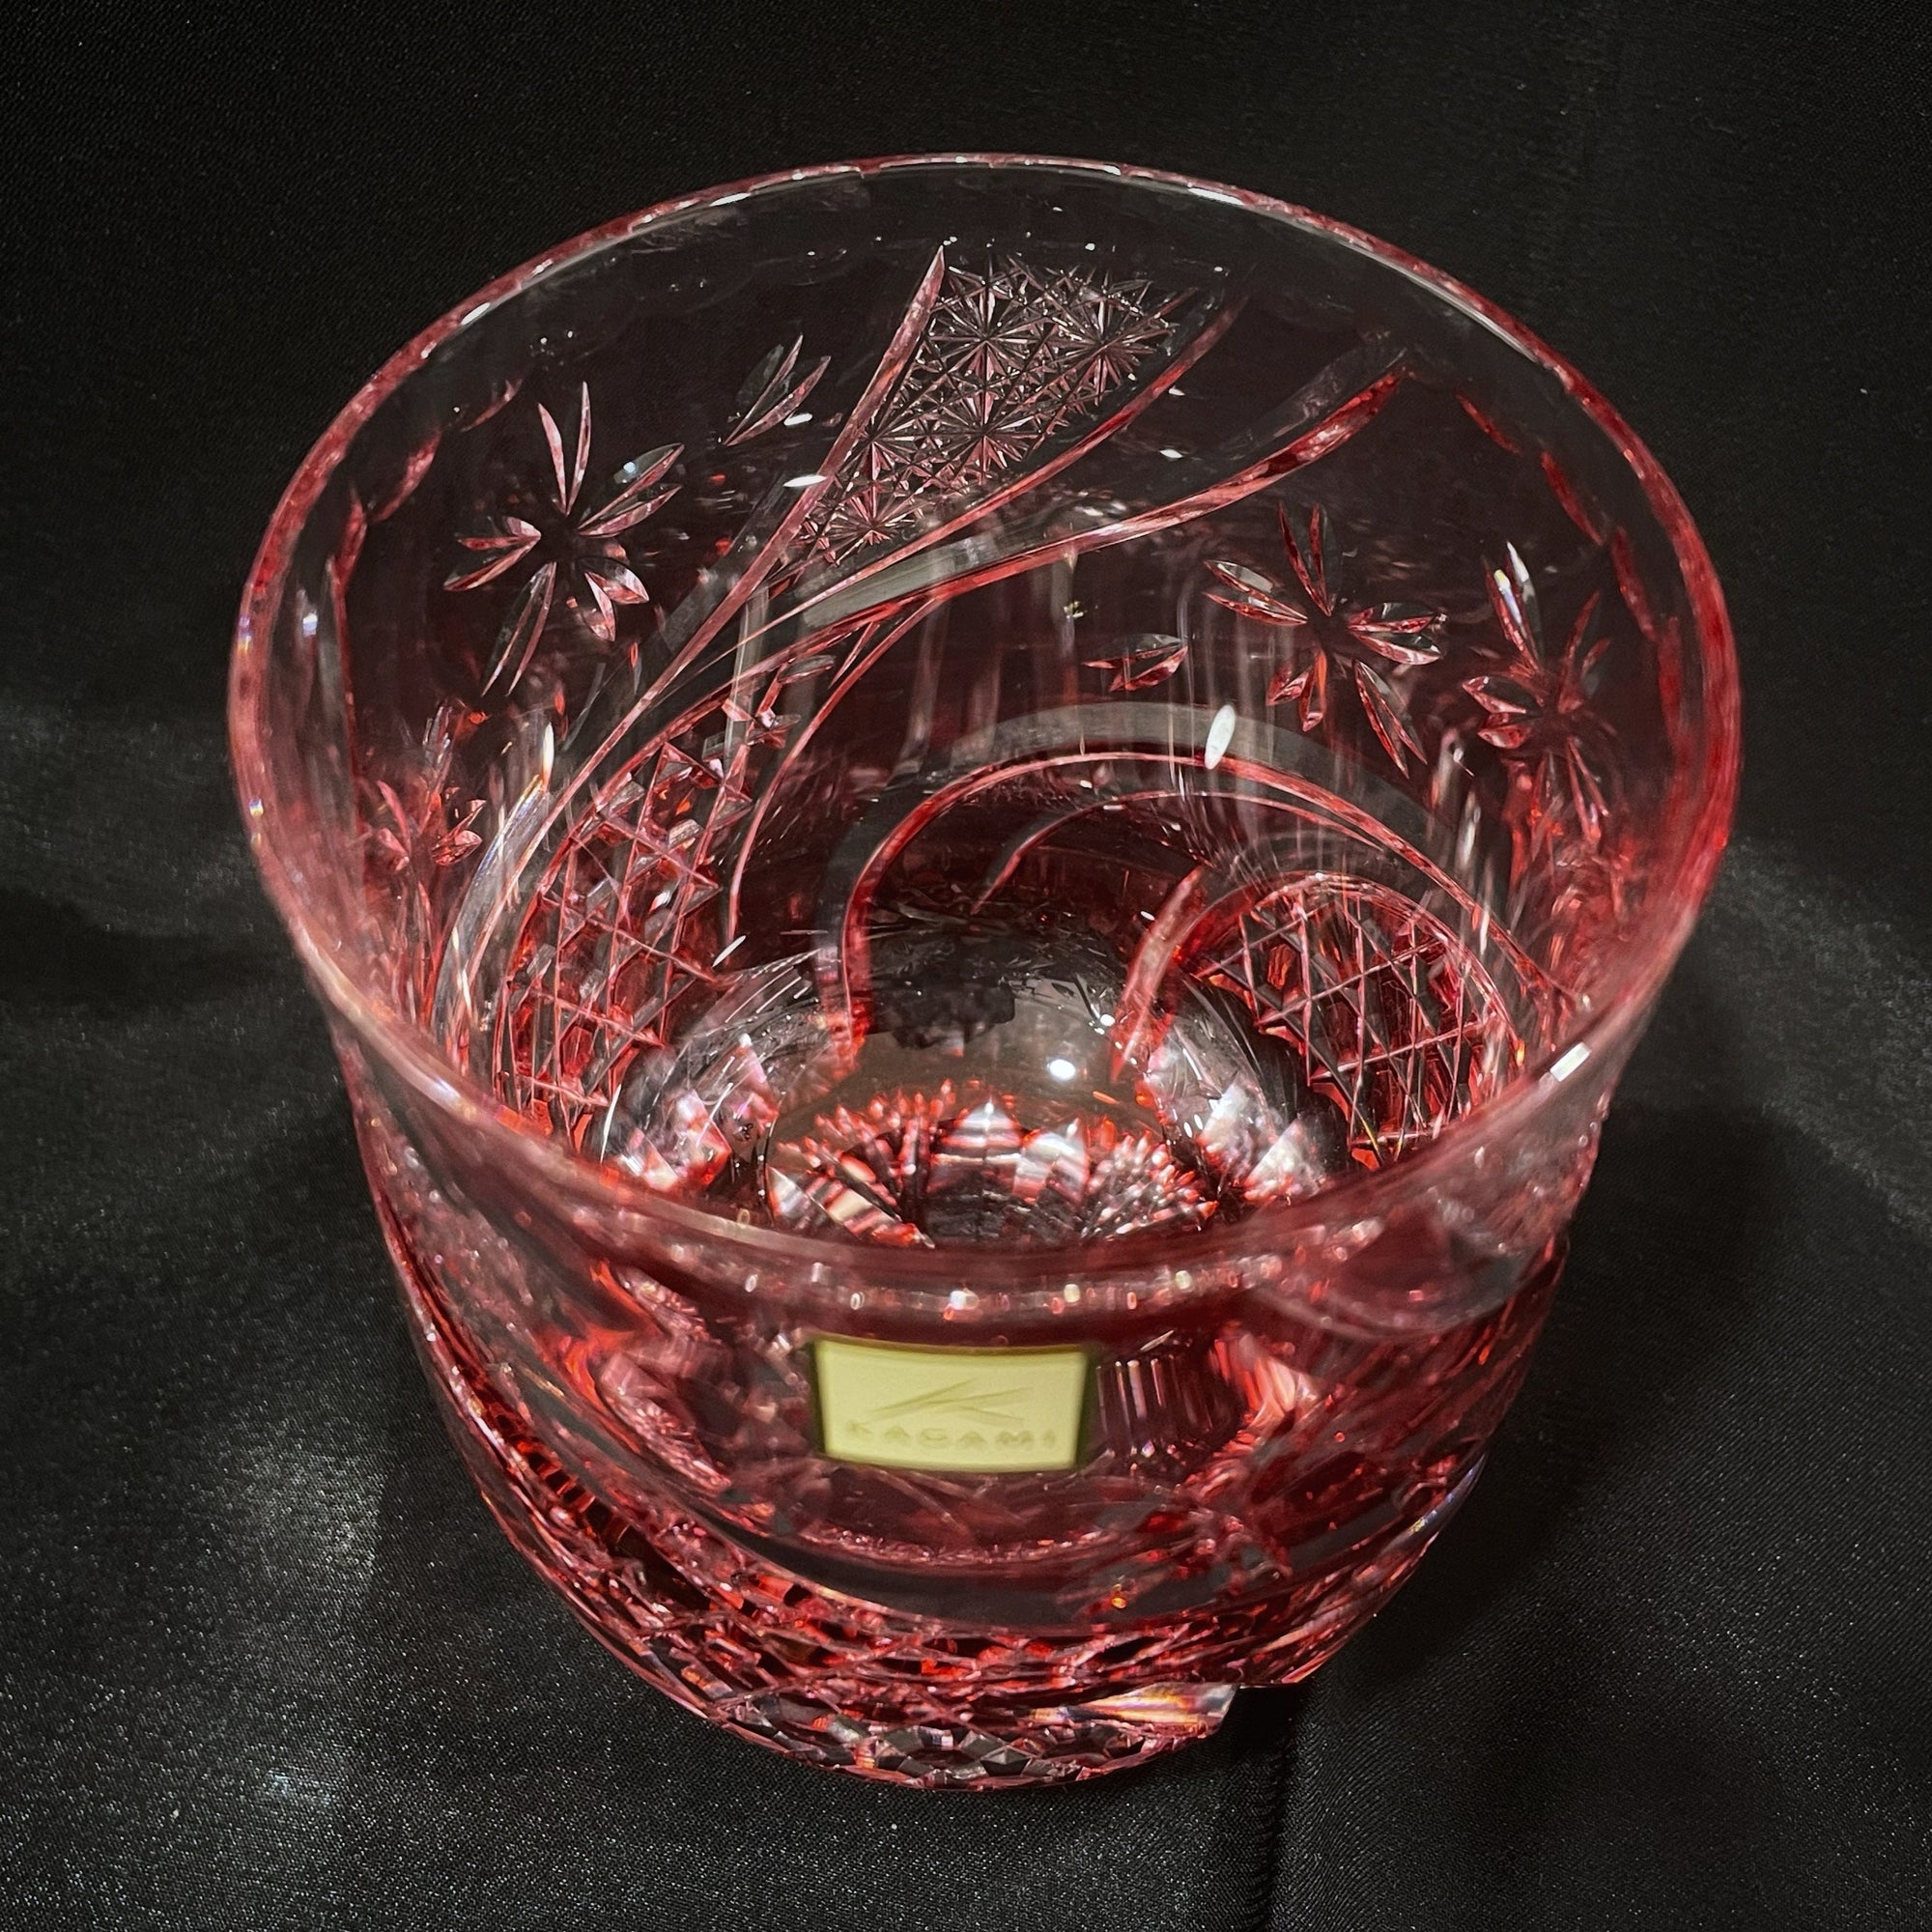 Kagami Edo Kiriko Whisky Glass - Sakura Nagare